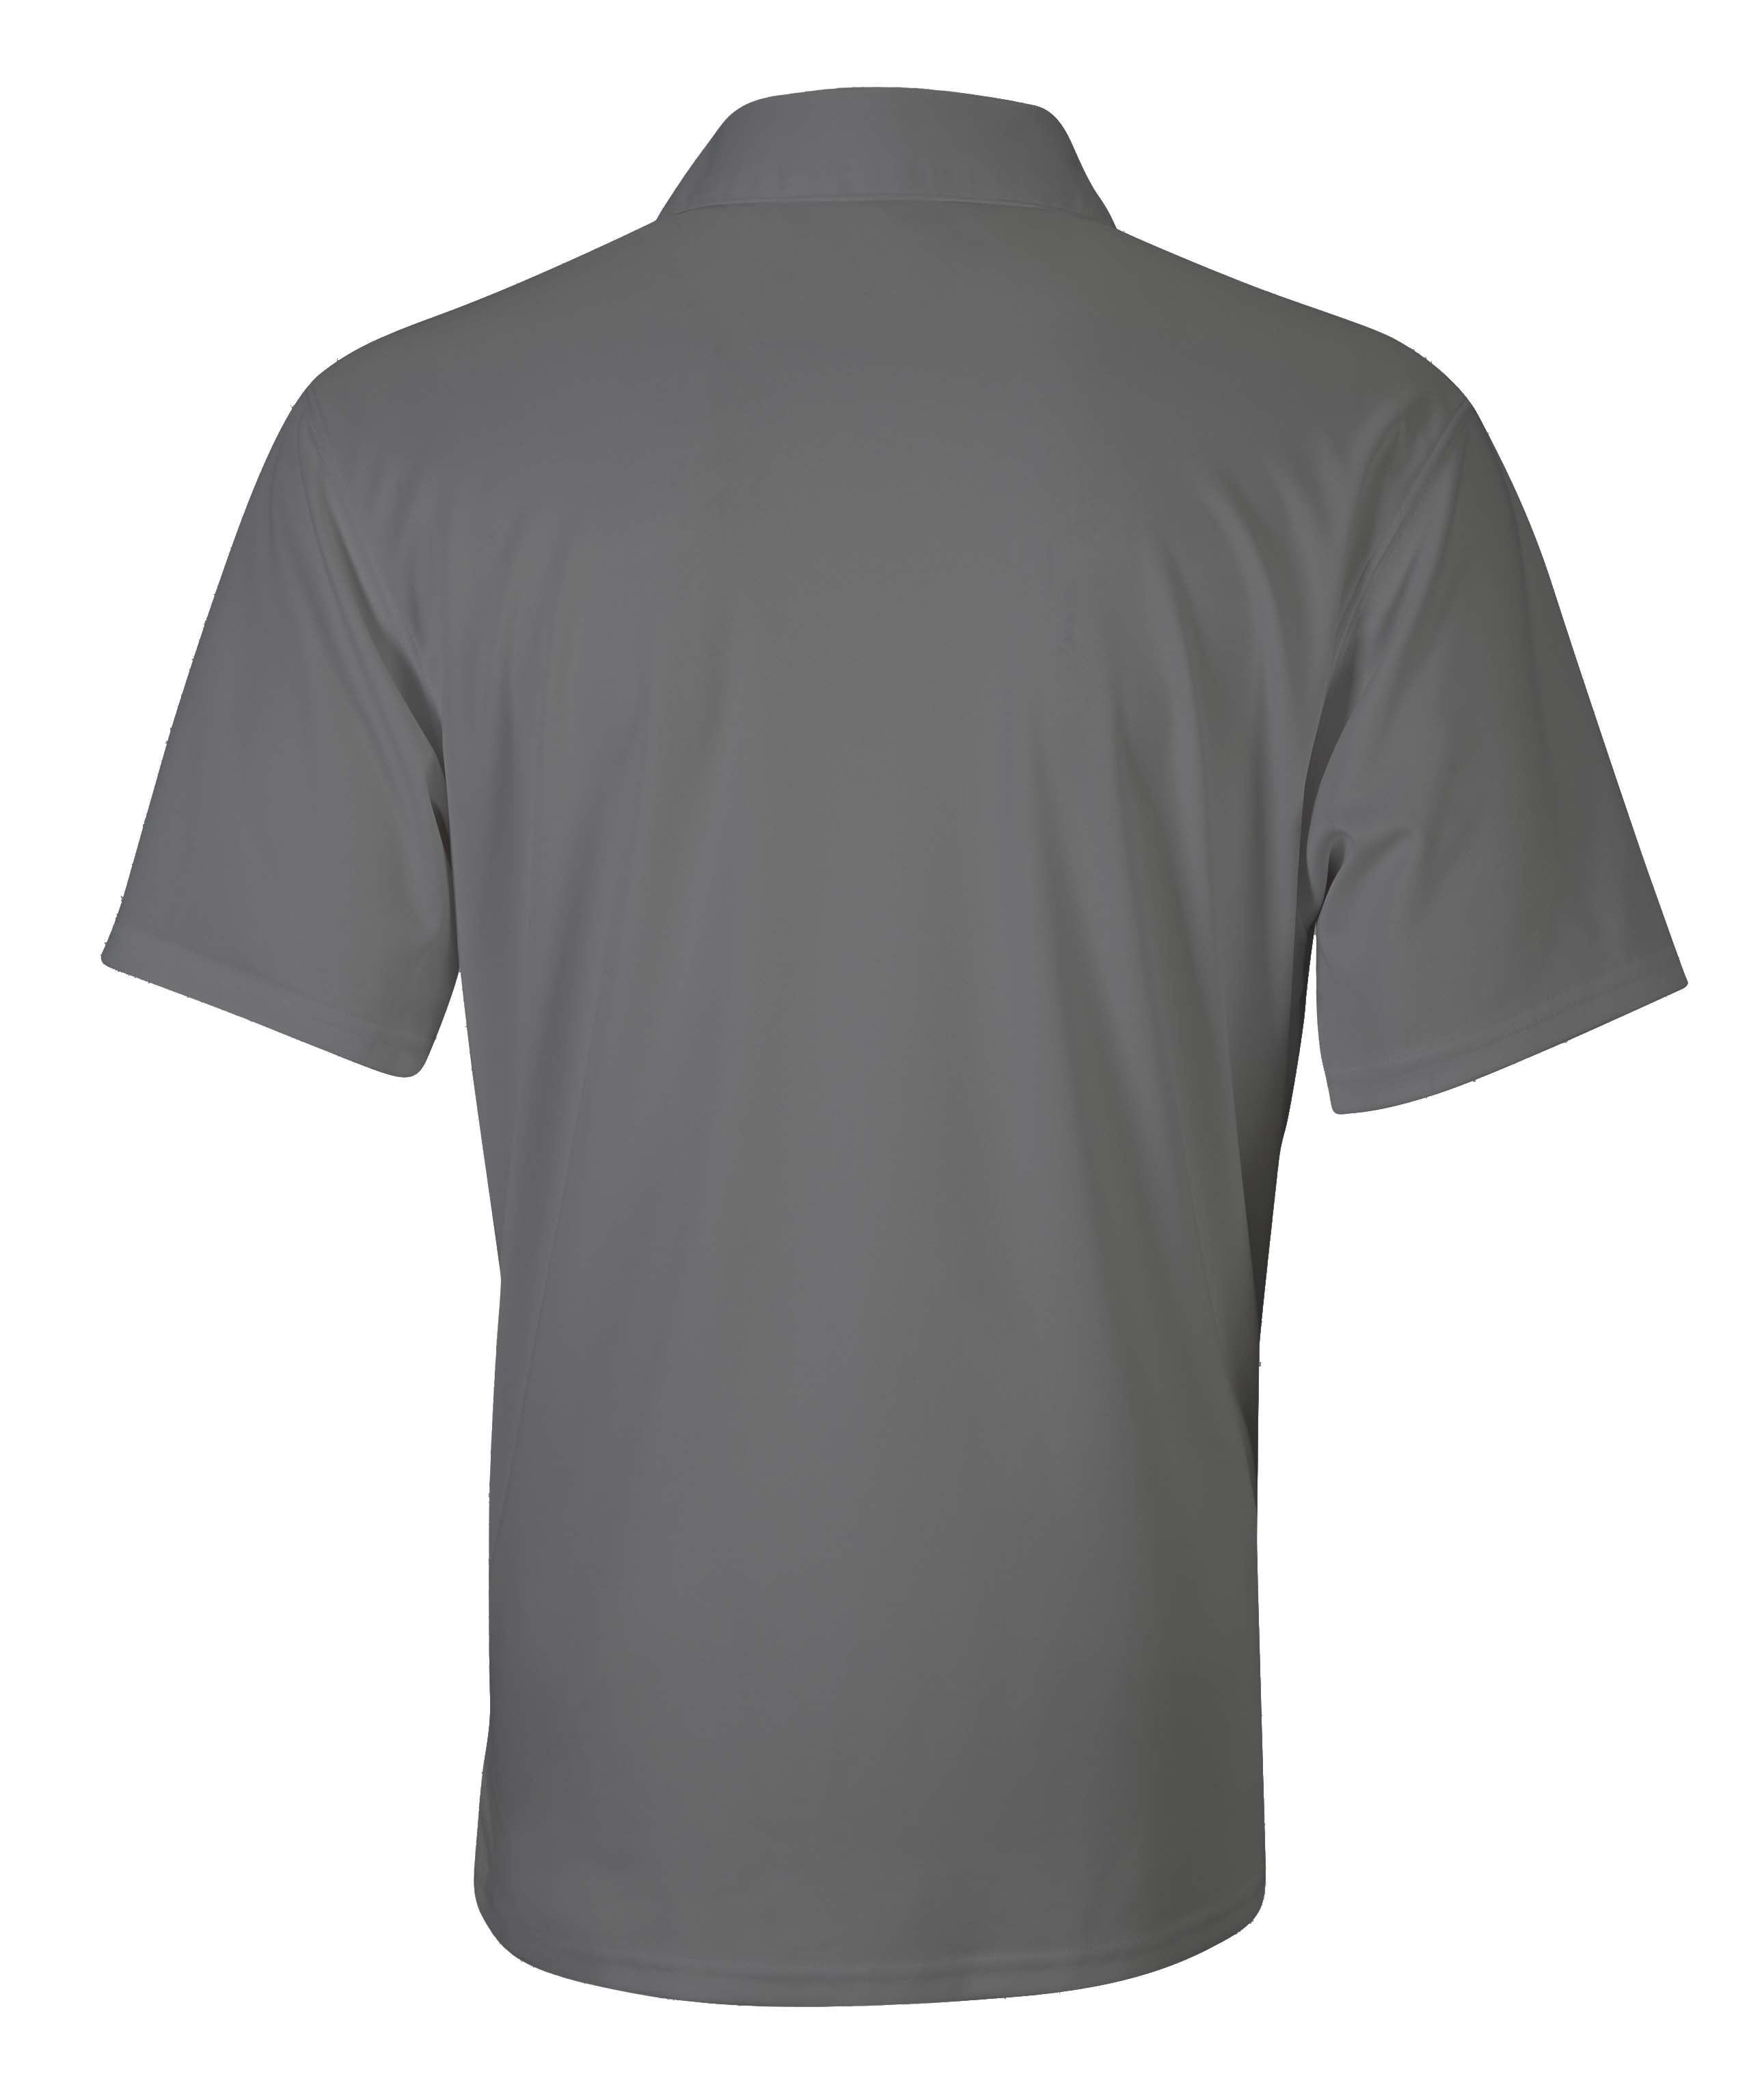 Denali Performance ProtectUV® Polo Short Sleeve